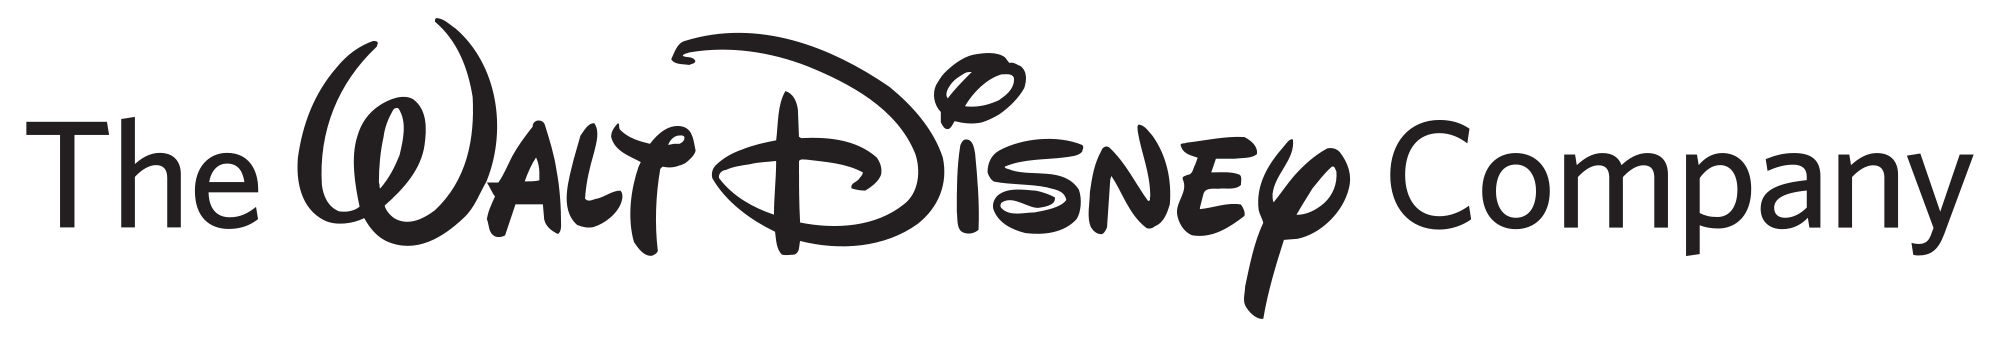 Plik:The Walt Disney Company.png